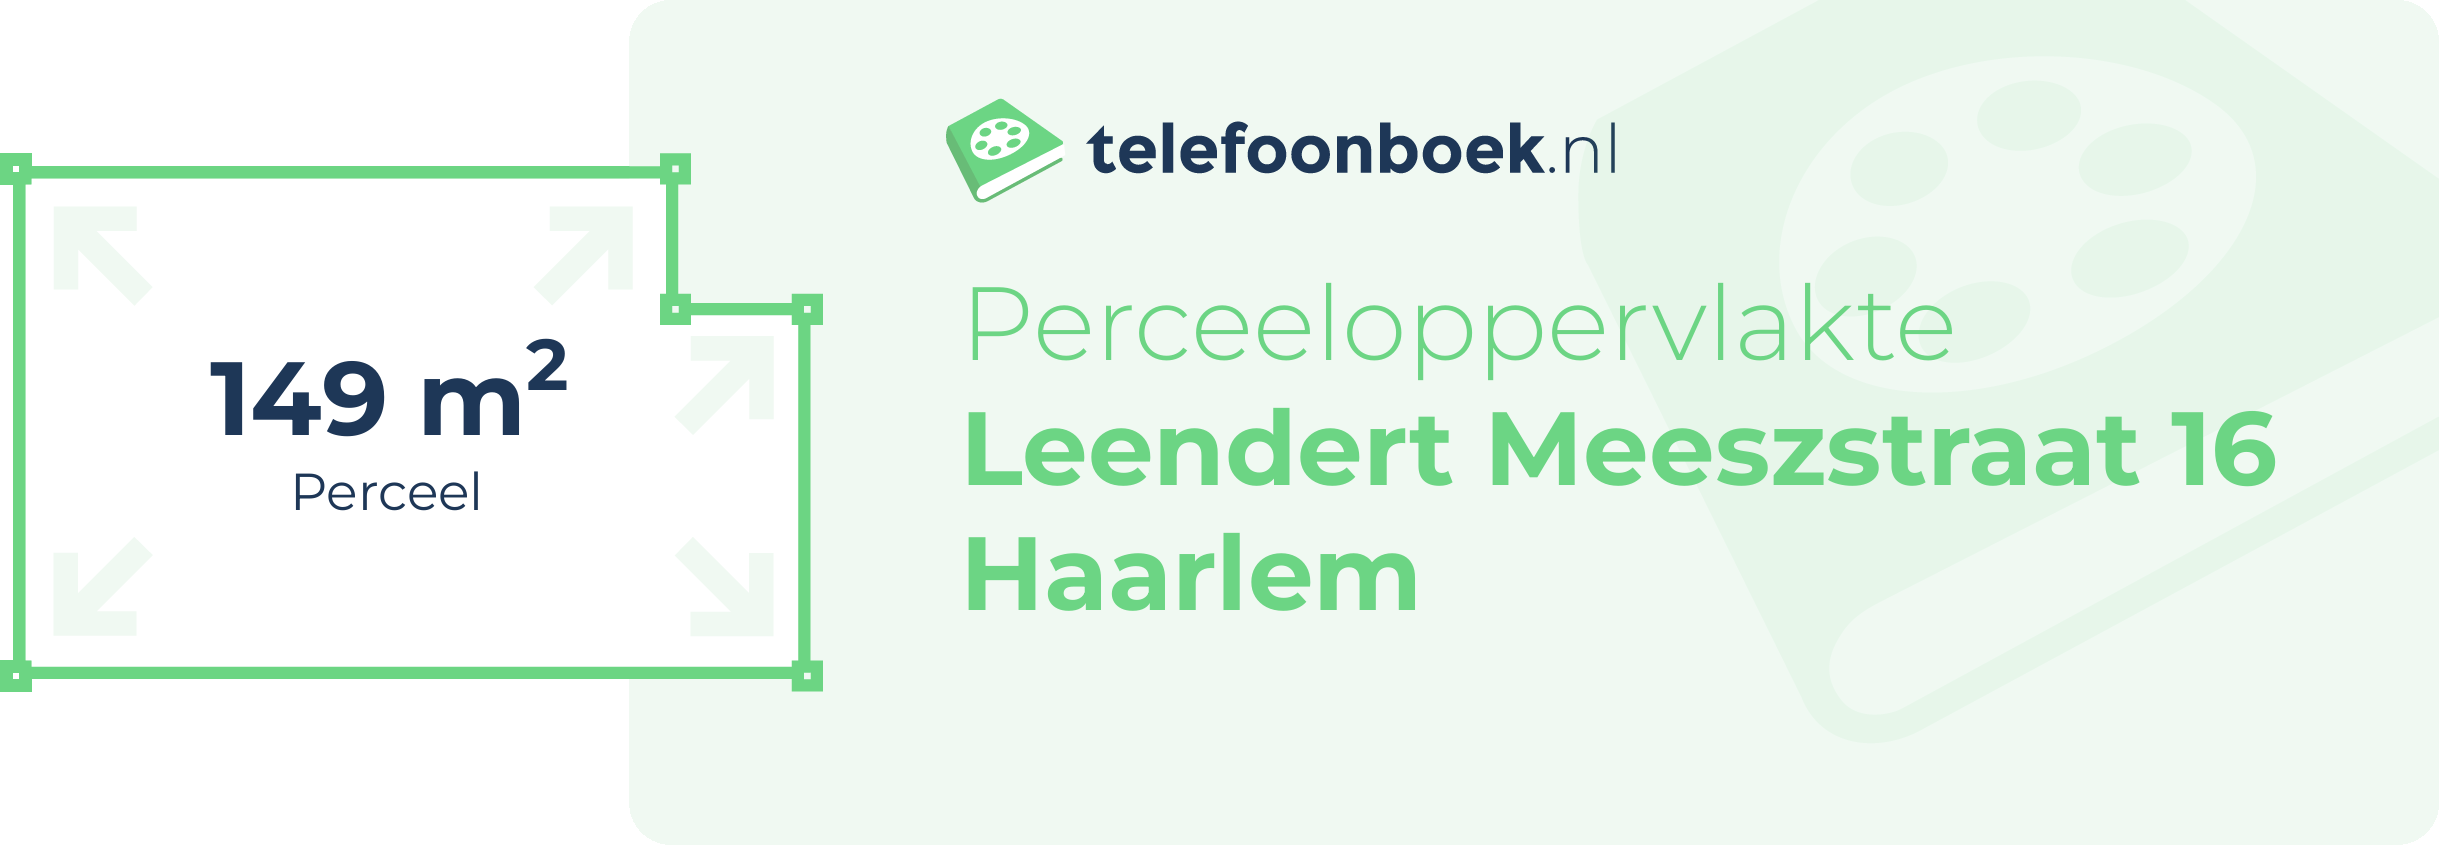 Perceeloppervlakte Leendert Meeszstraat 16 Haarlem